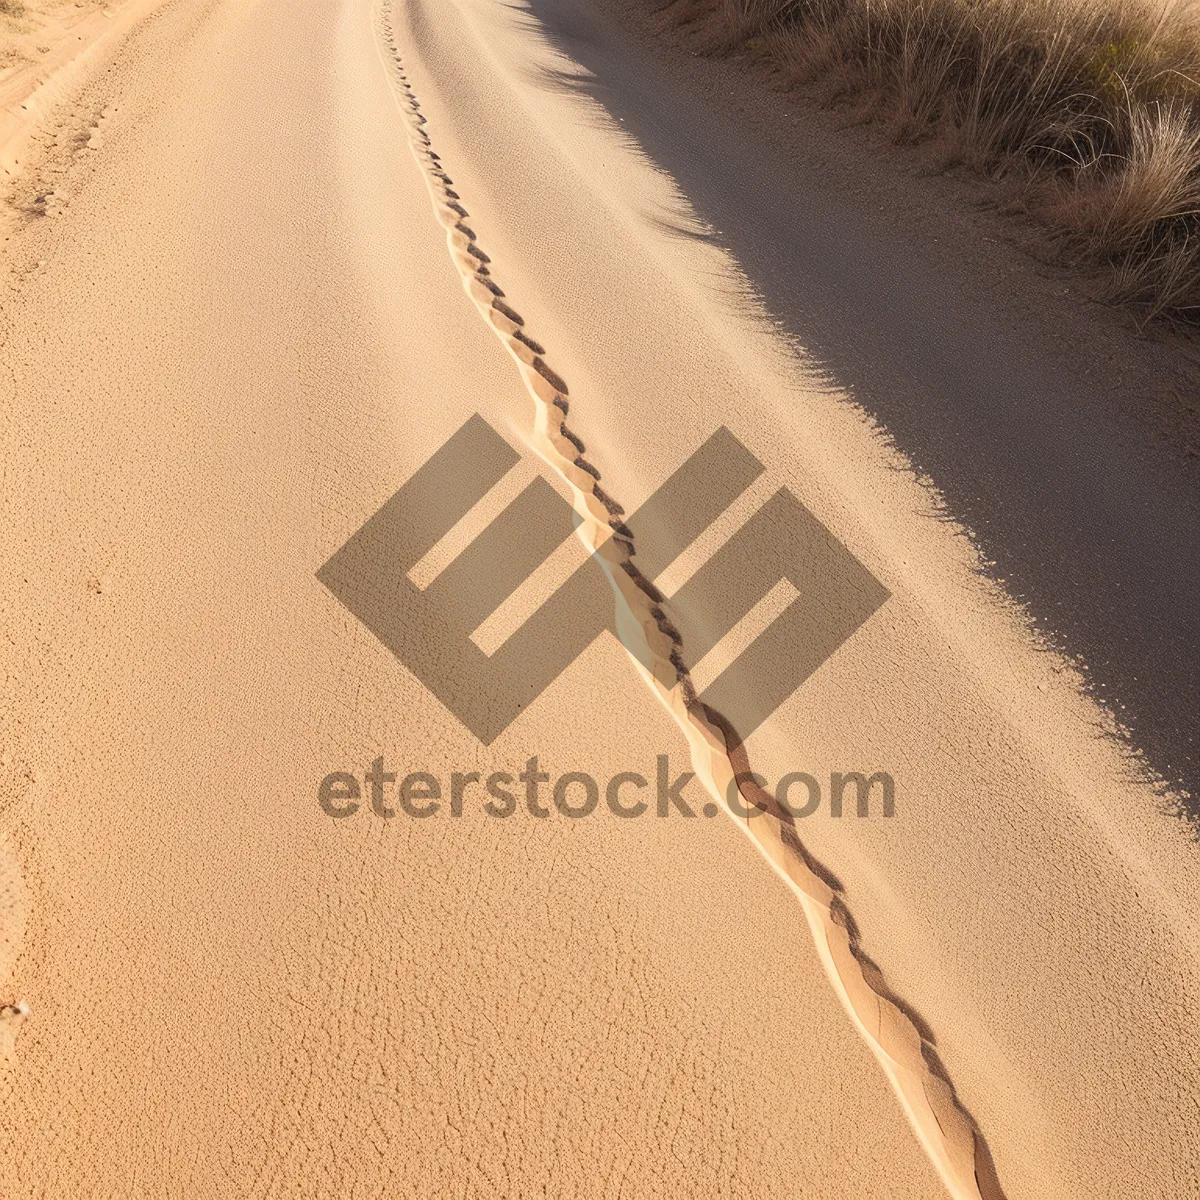 Picture of Sandy Summer Dunes: A Textured Desert Landscape